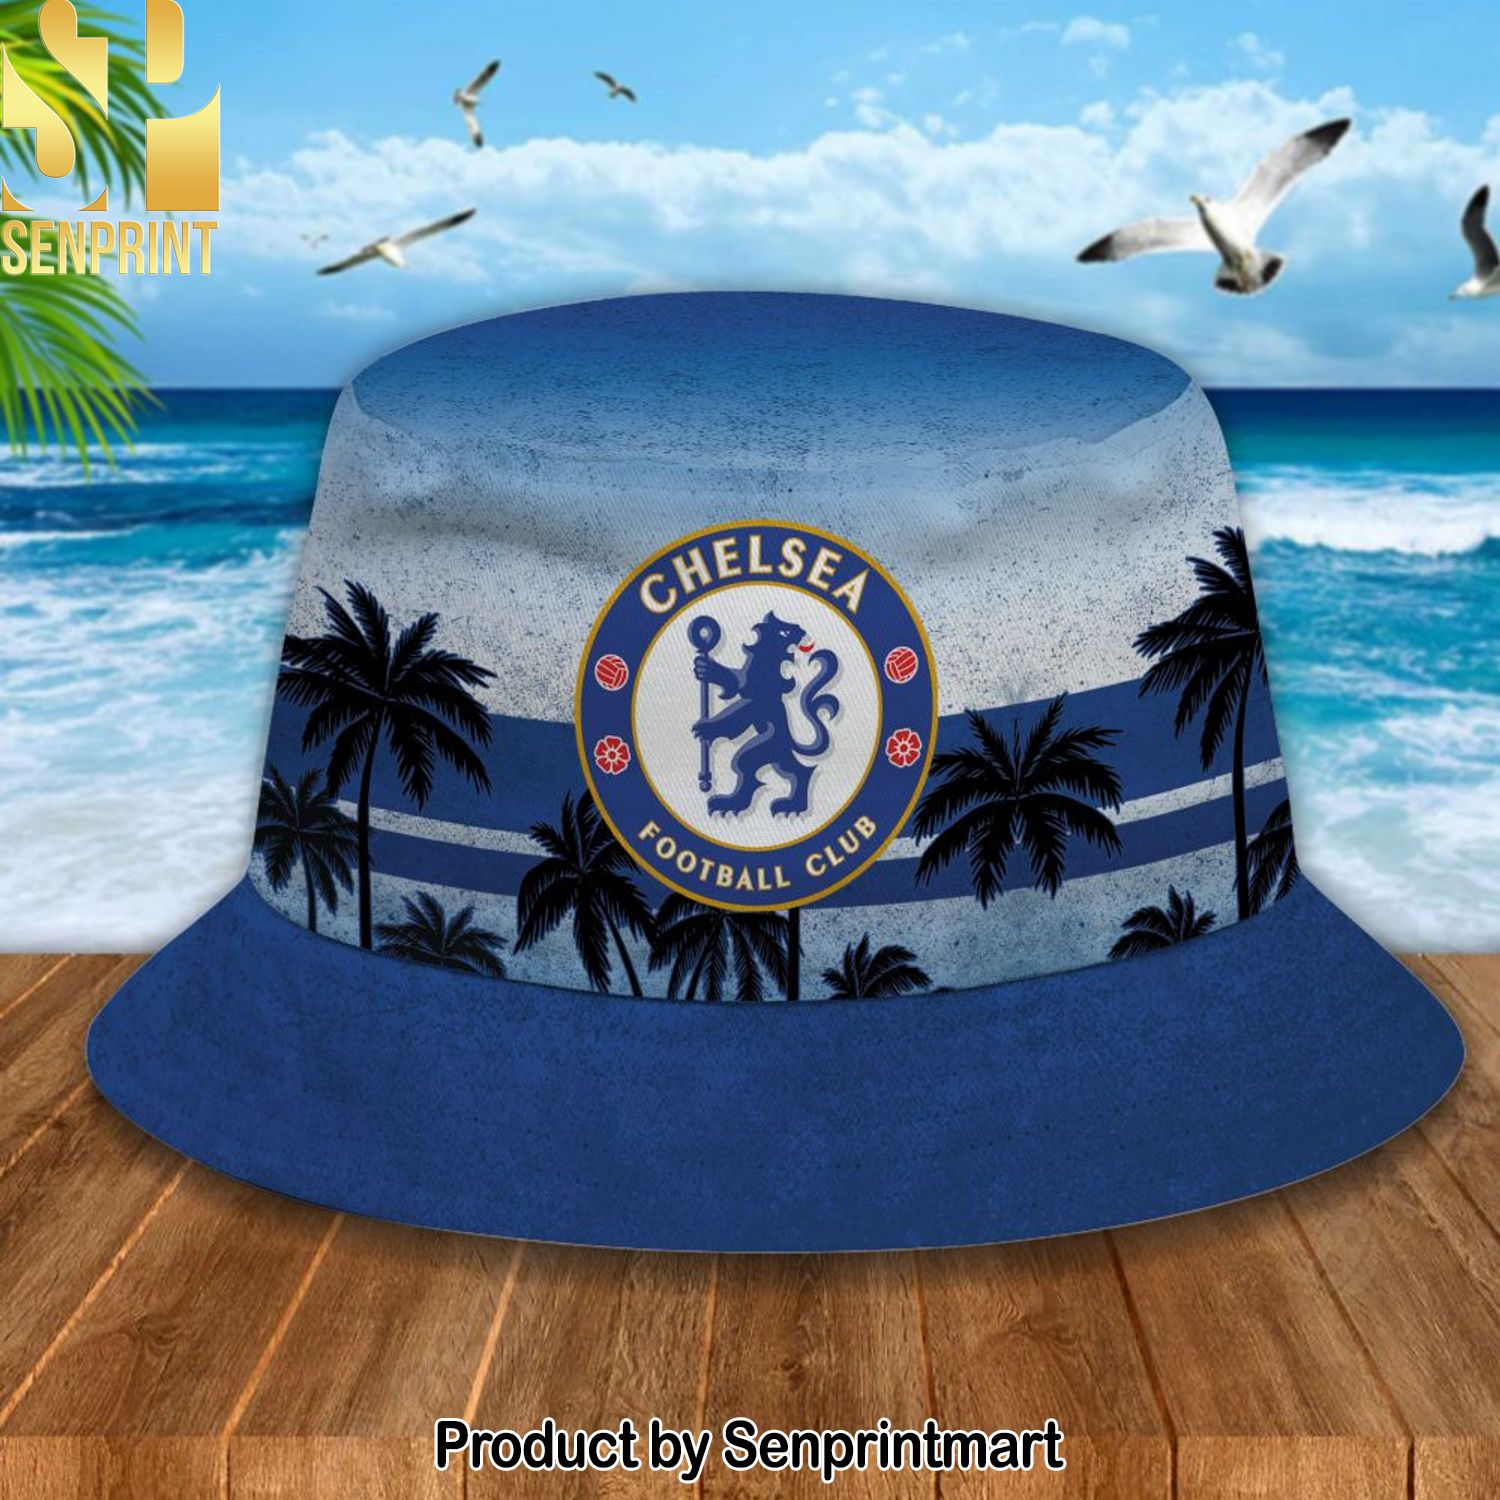 Chelsea Football Club New Fashion Full Printed Hawaiian Print Aloha Button Down Short Sleeve Shirt